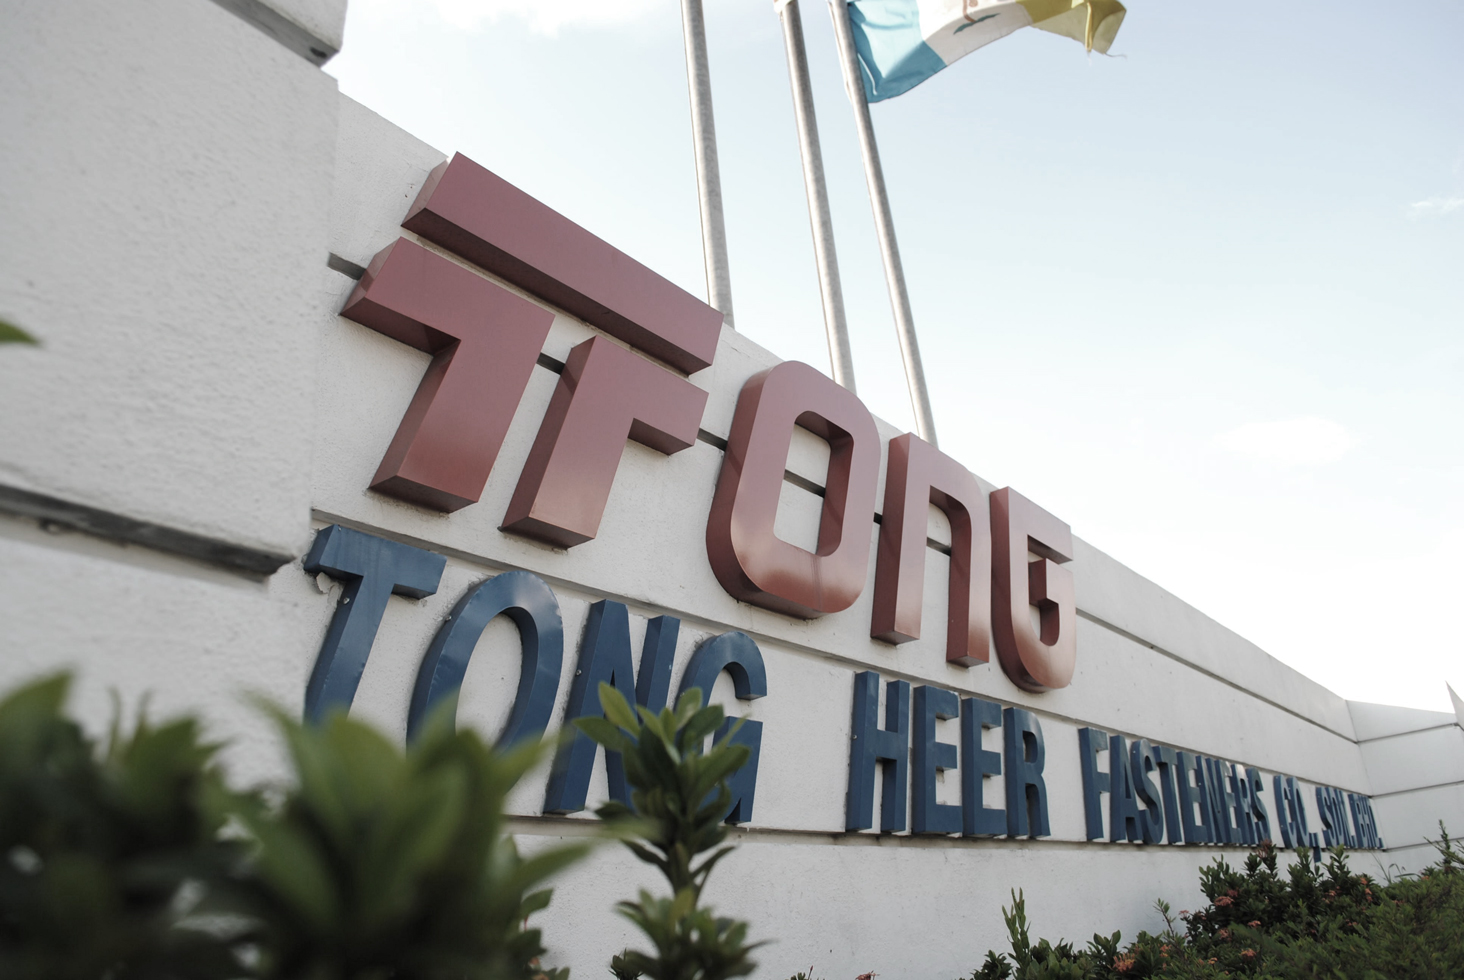 Tong Herr Factory Image